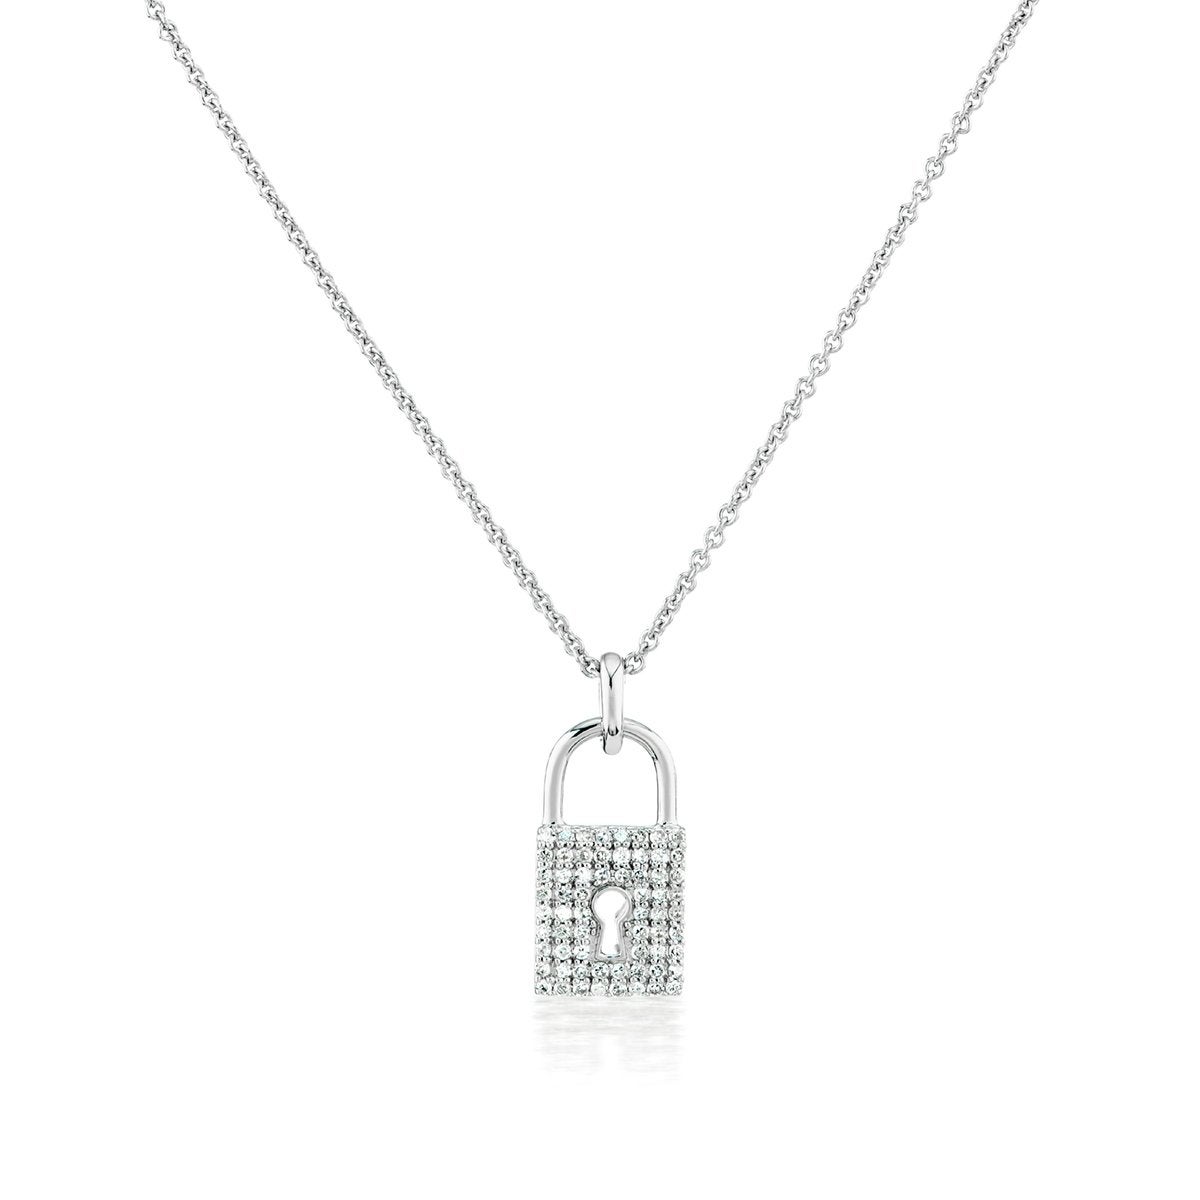 Serena Williams Jewelry Little Lock Necklace